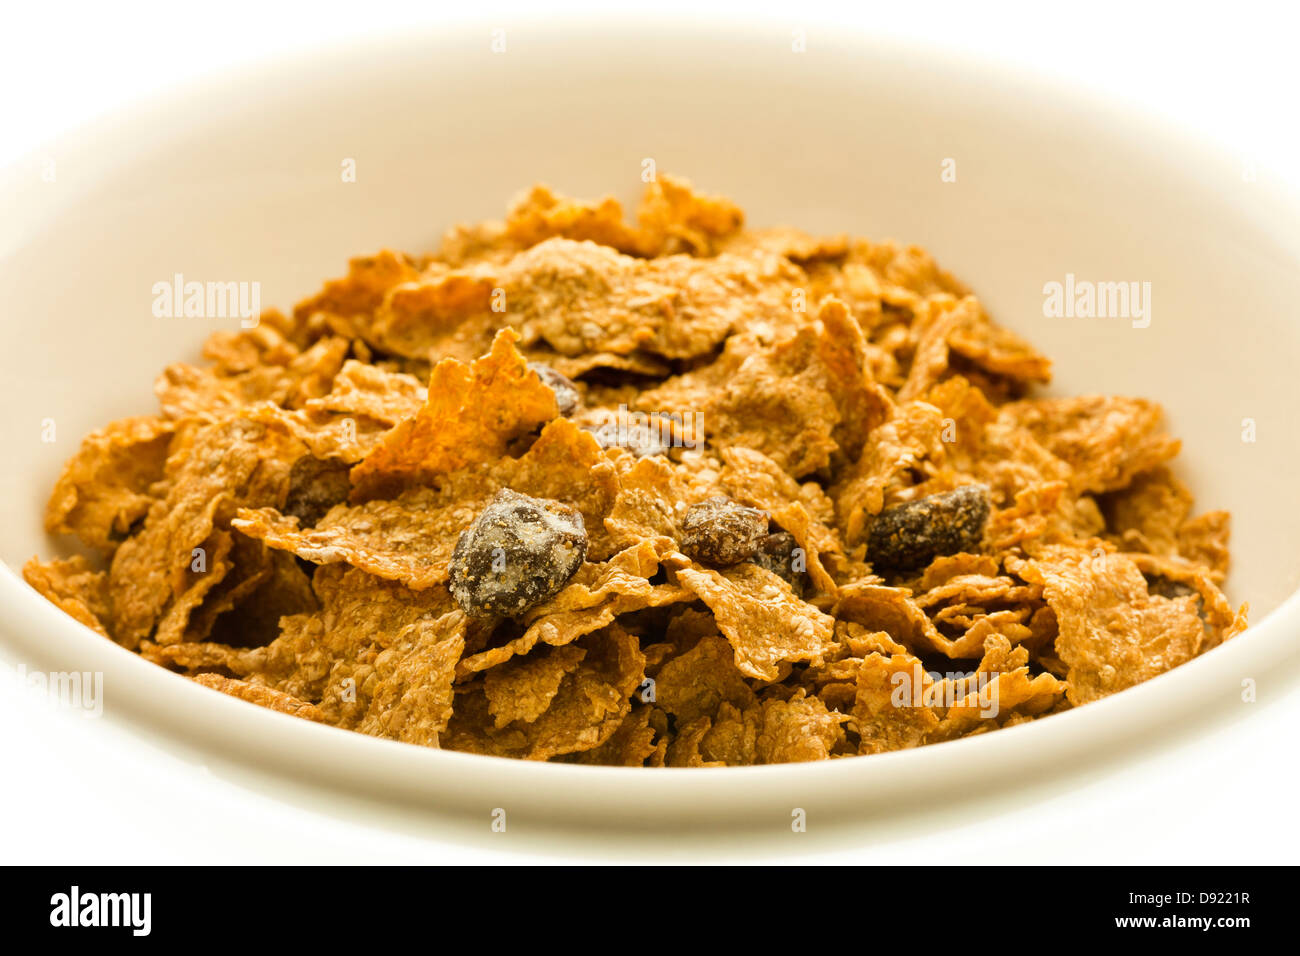 Bowl of raisin bran cereal Stock Photo